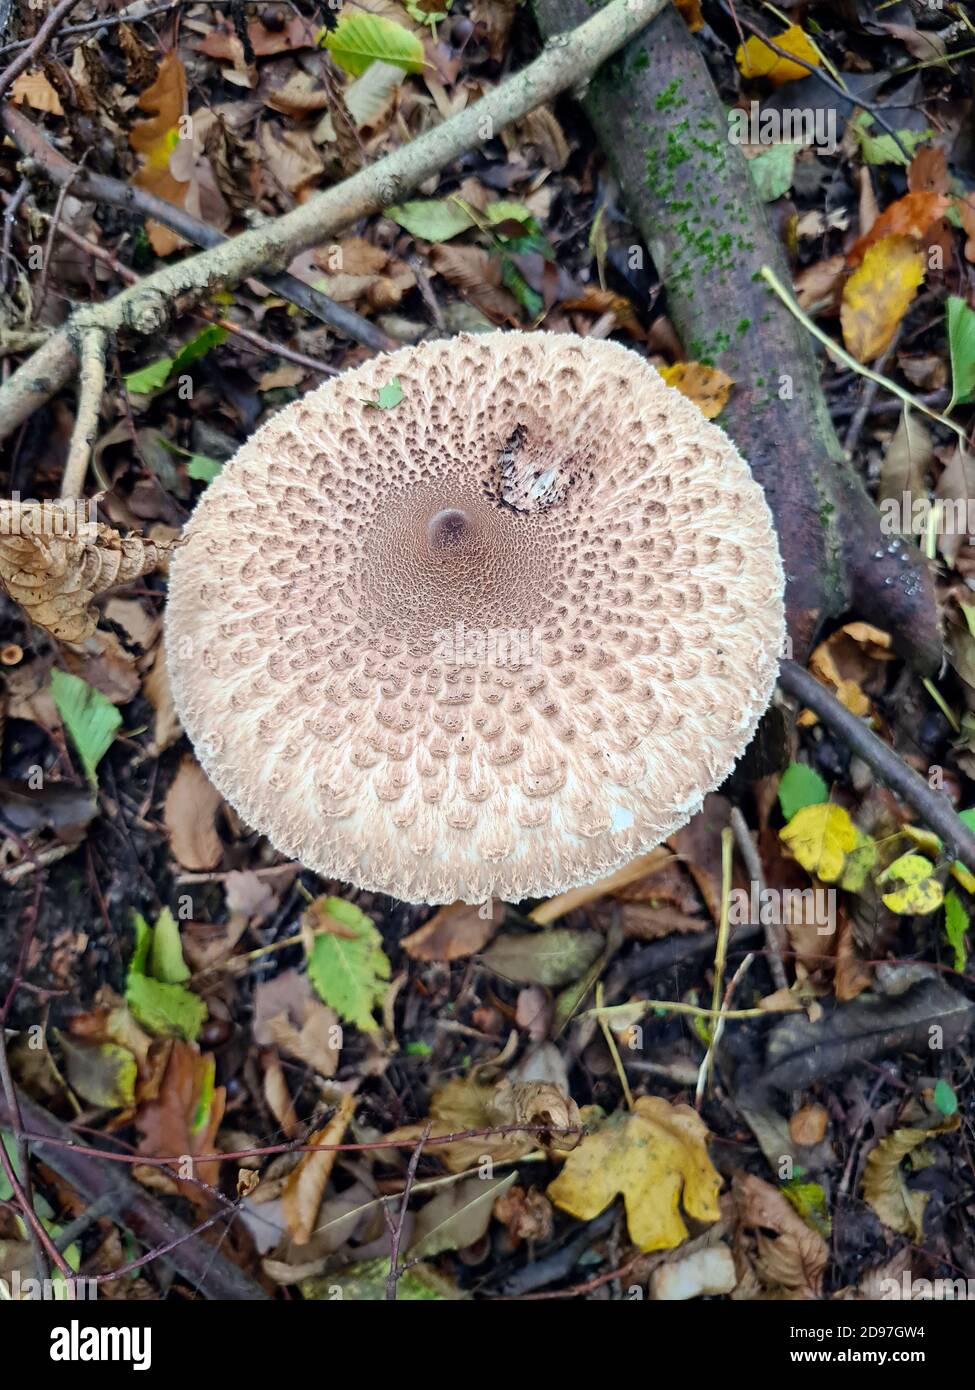 edible parasol mushroom Stock Photo